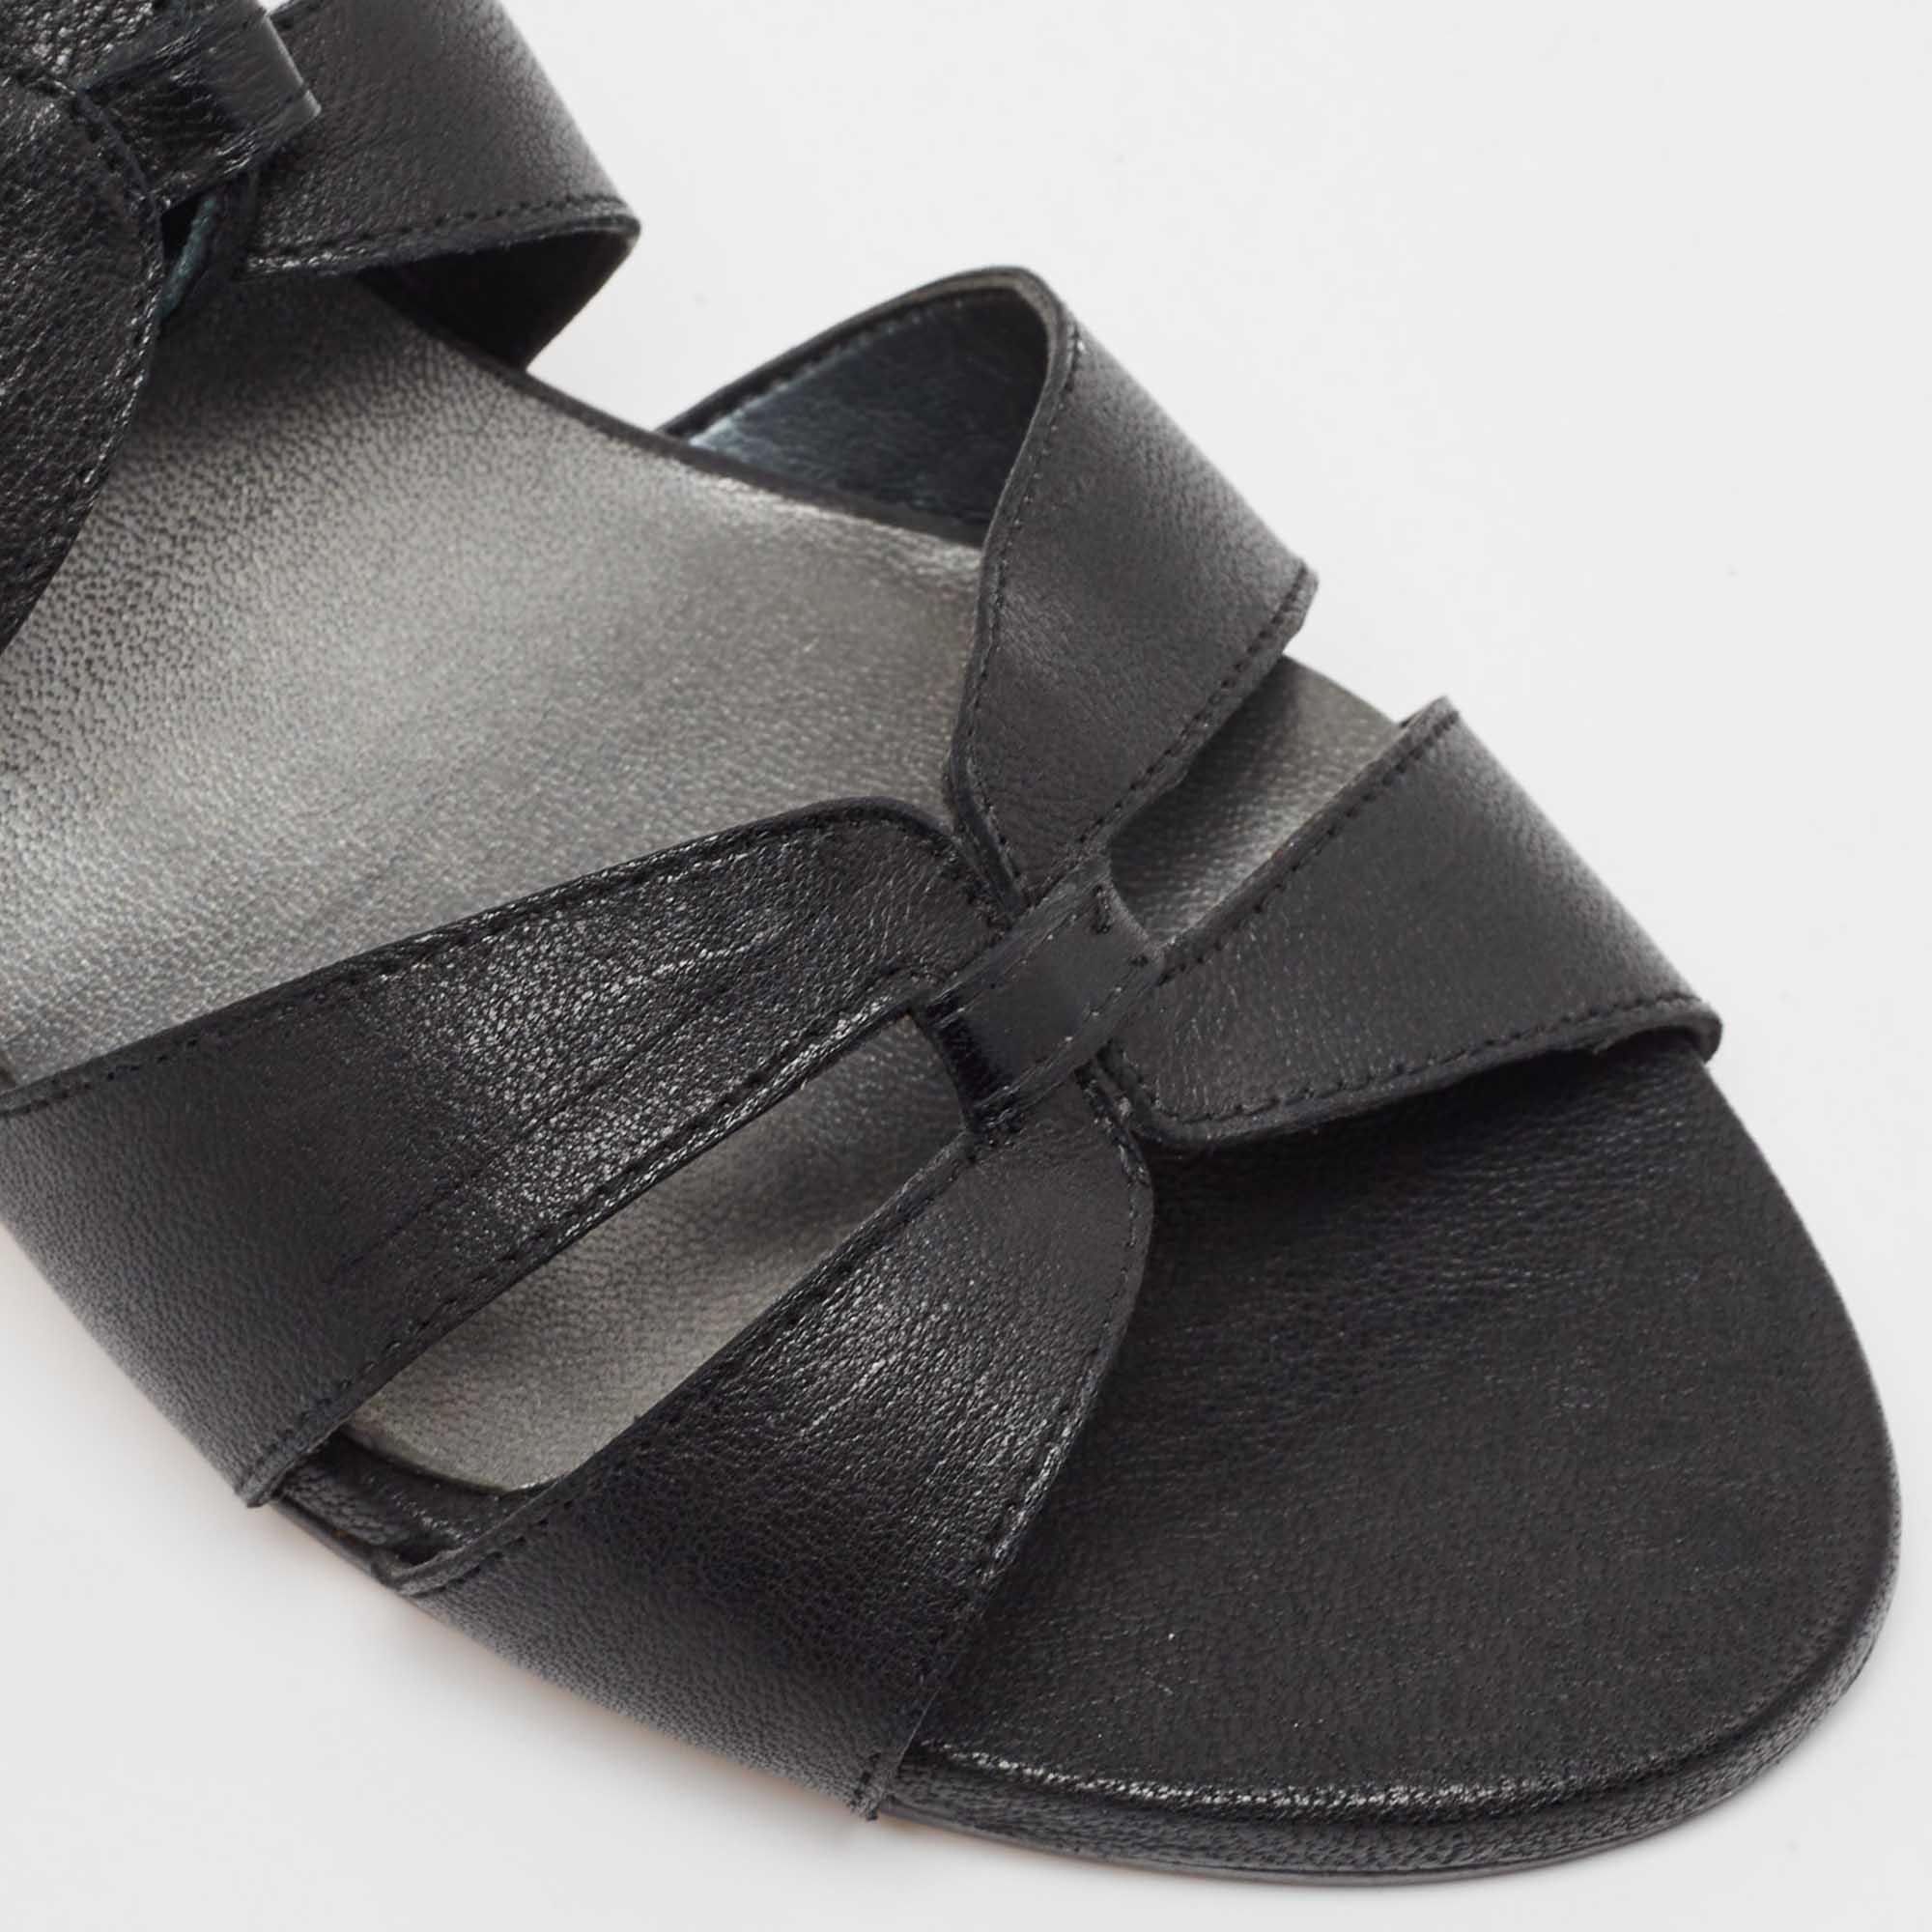 Stuart Weitzman Black Leather Grecian Gladiator Sandals Size 40